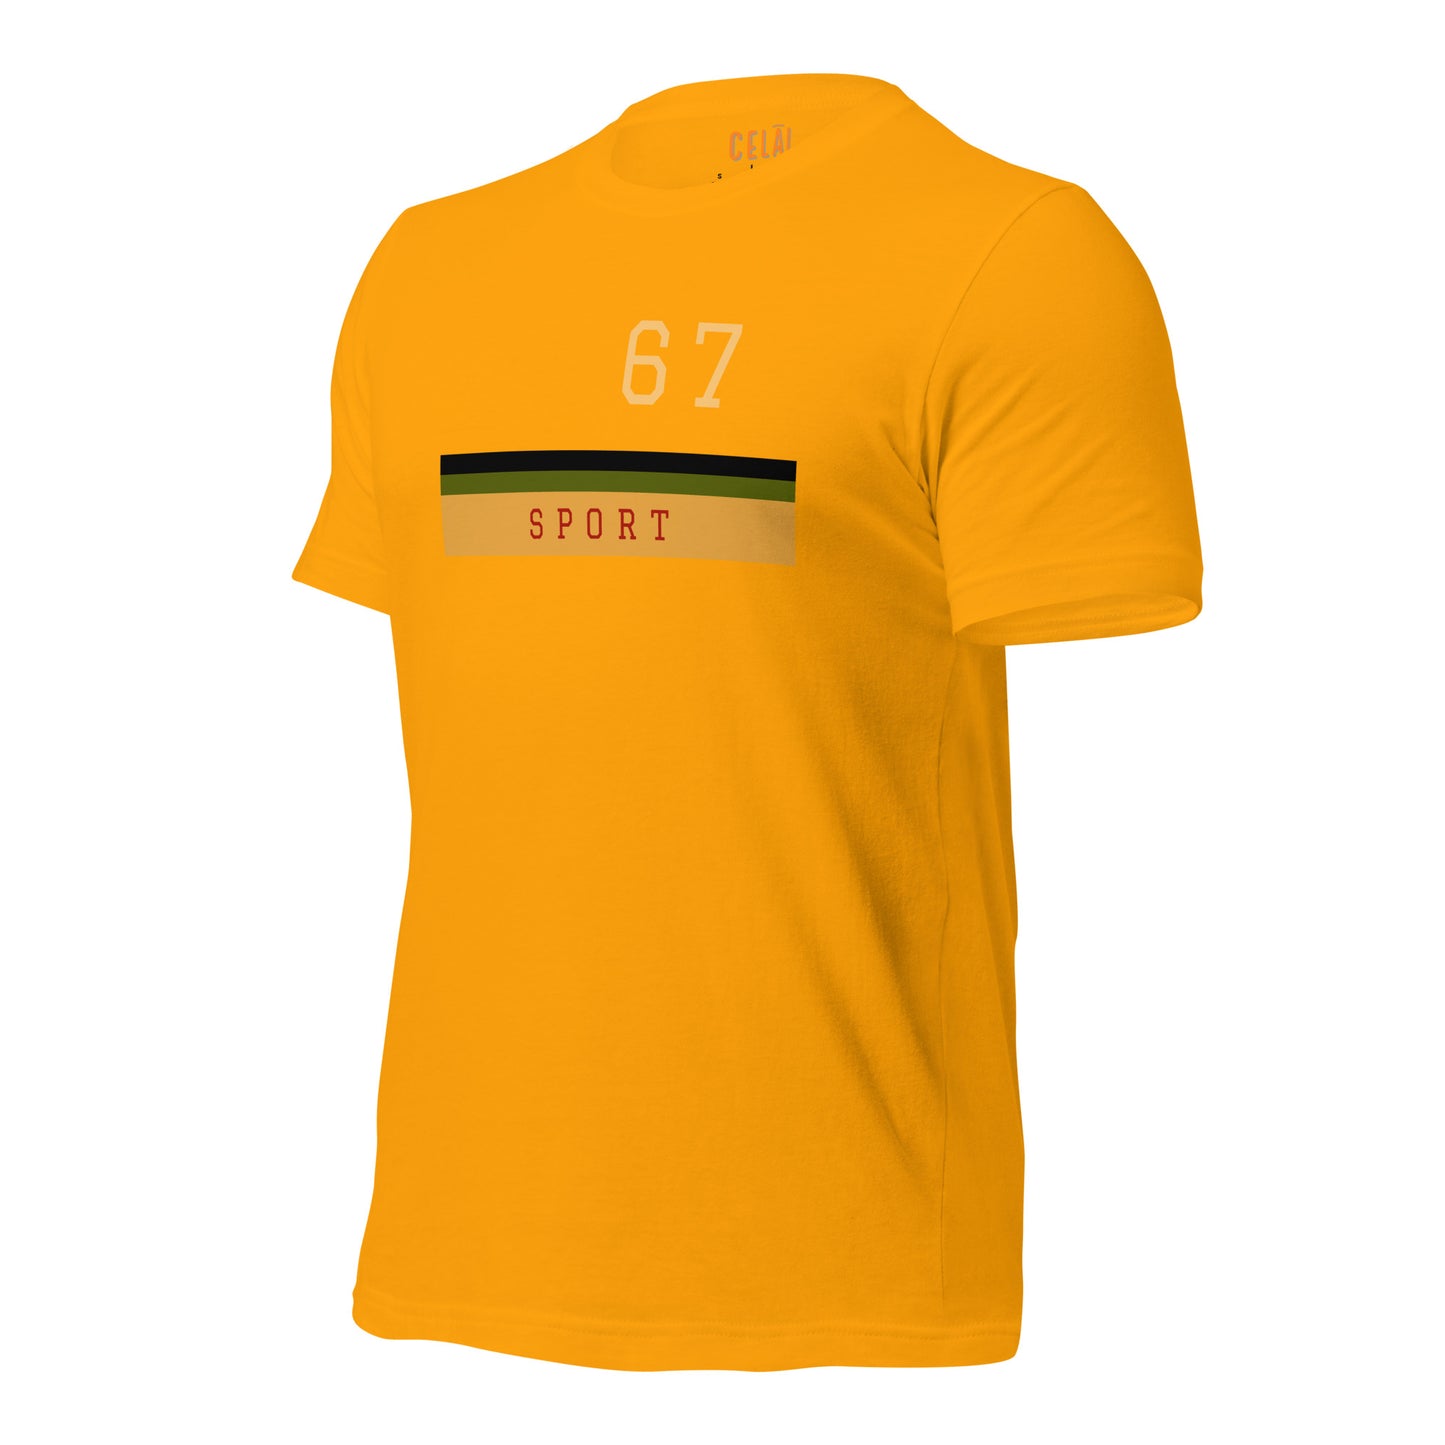 67 Unisex t-shirt